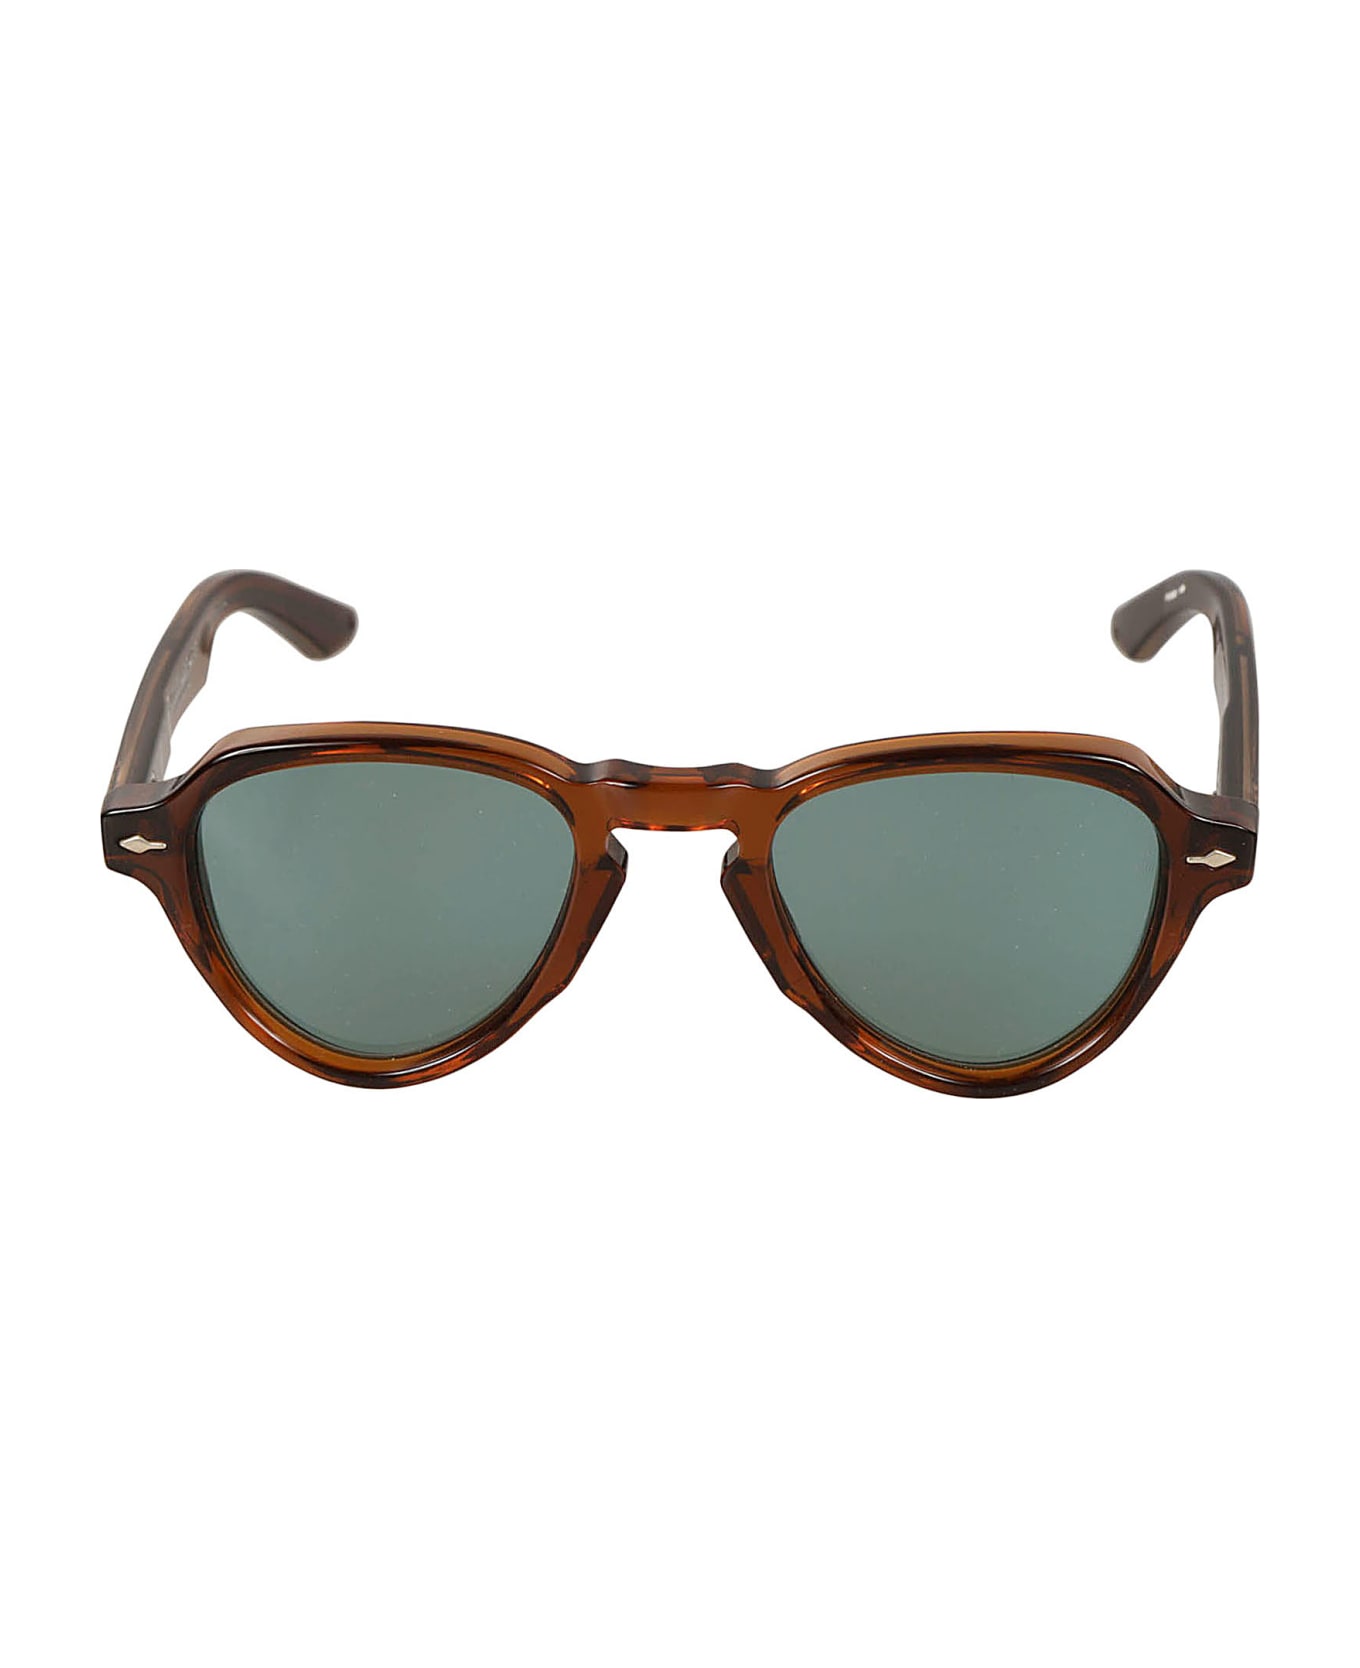 Jacques Marie Mage Hickory Sunglasses Sunglasses - marrone-oro サングラス